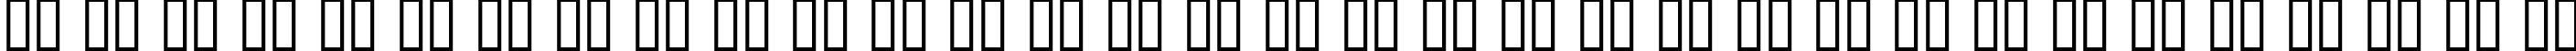 Пример написания русского алфавита шрифтом Holstein